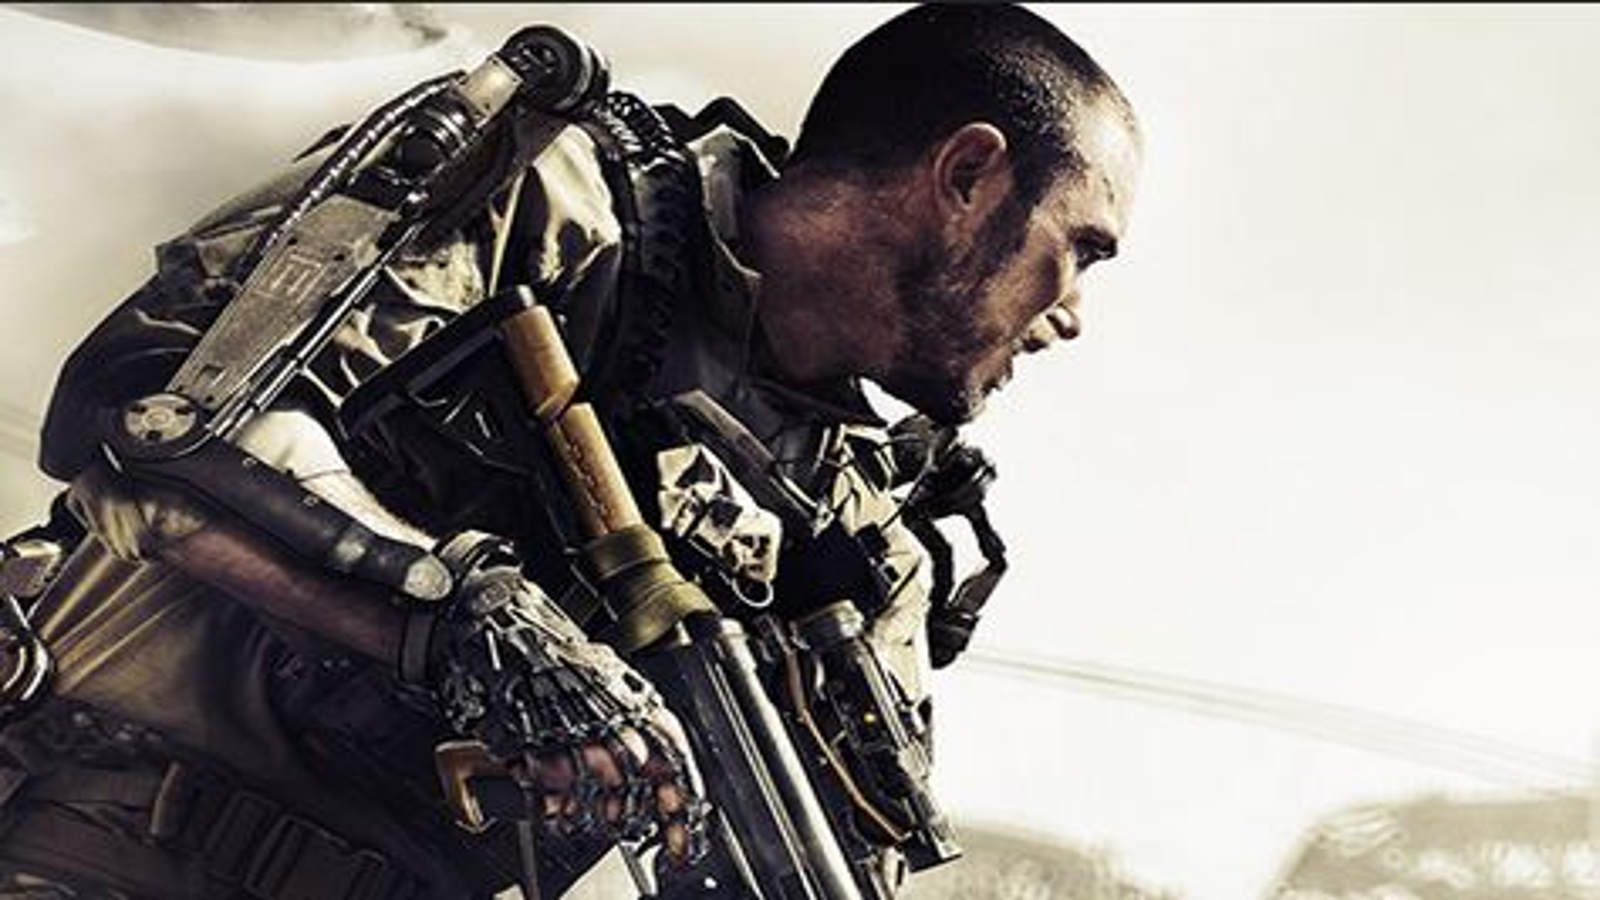 Reviews: Call of Duty: Advanced Warfare - IMDb